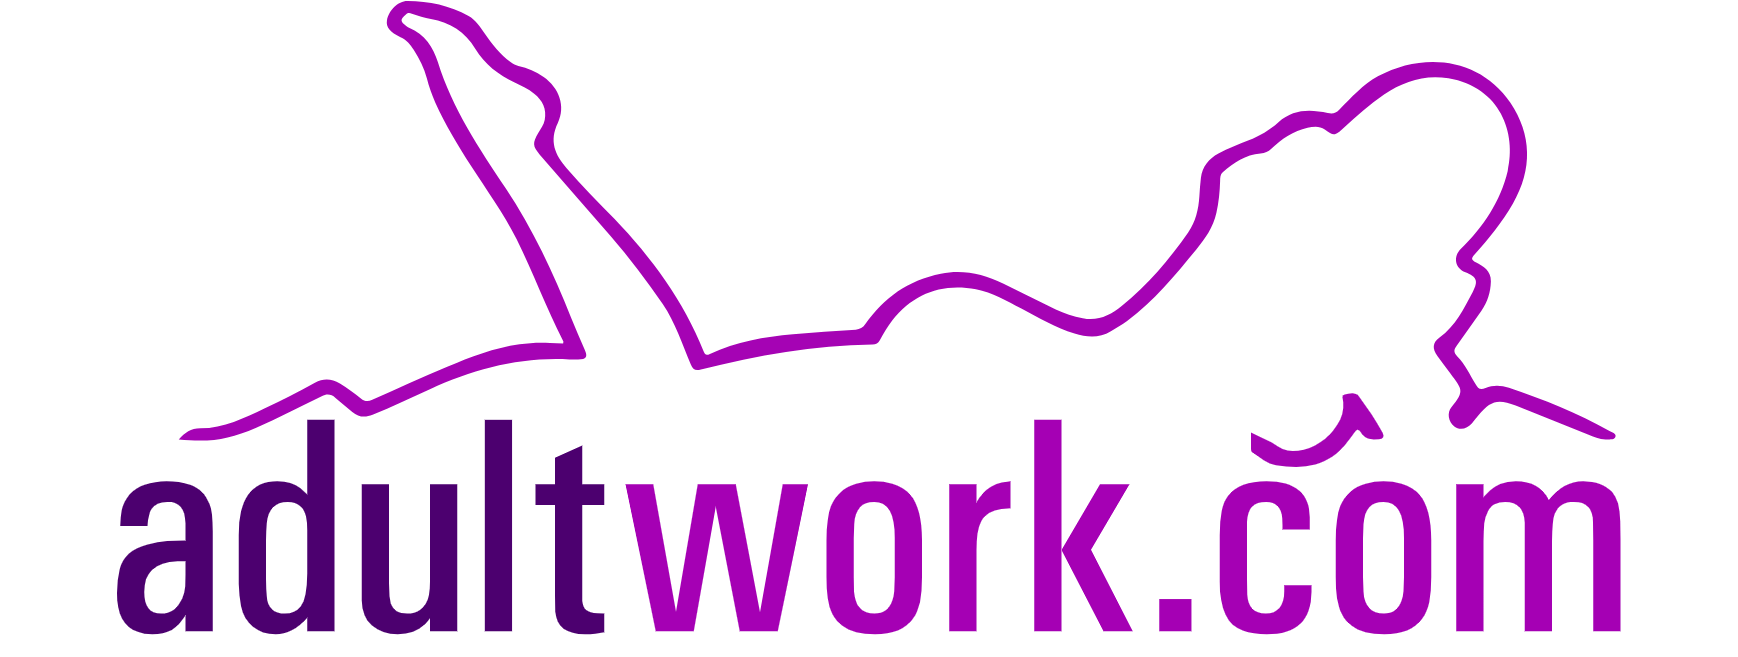 adultwork logo